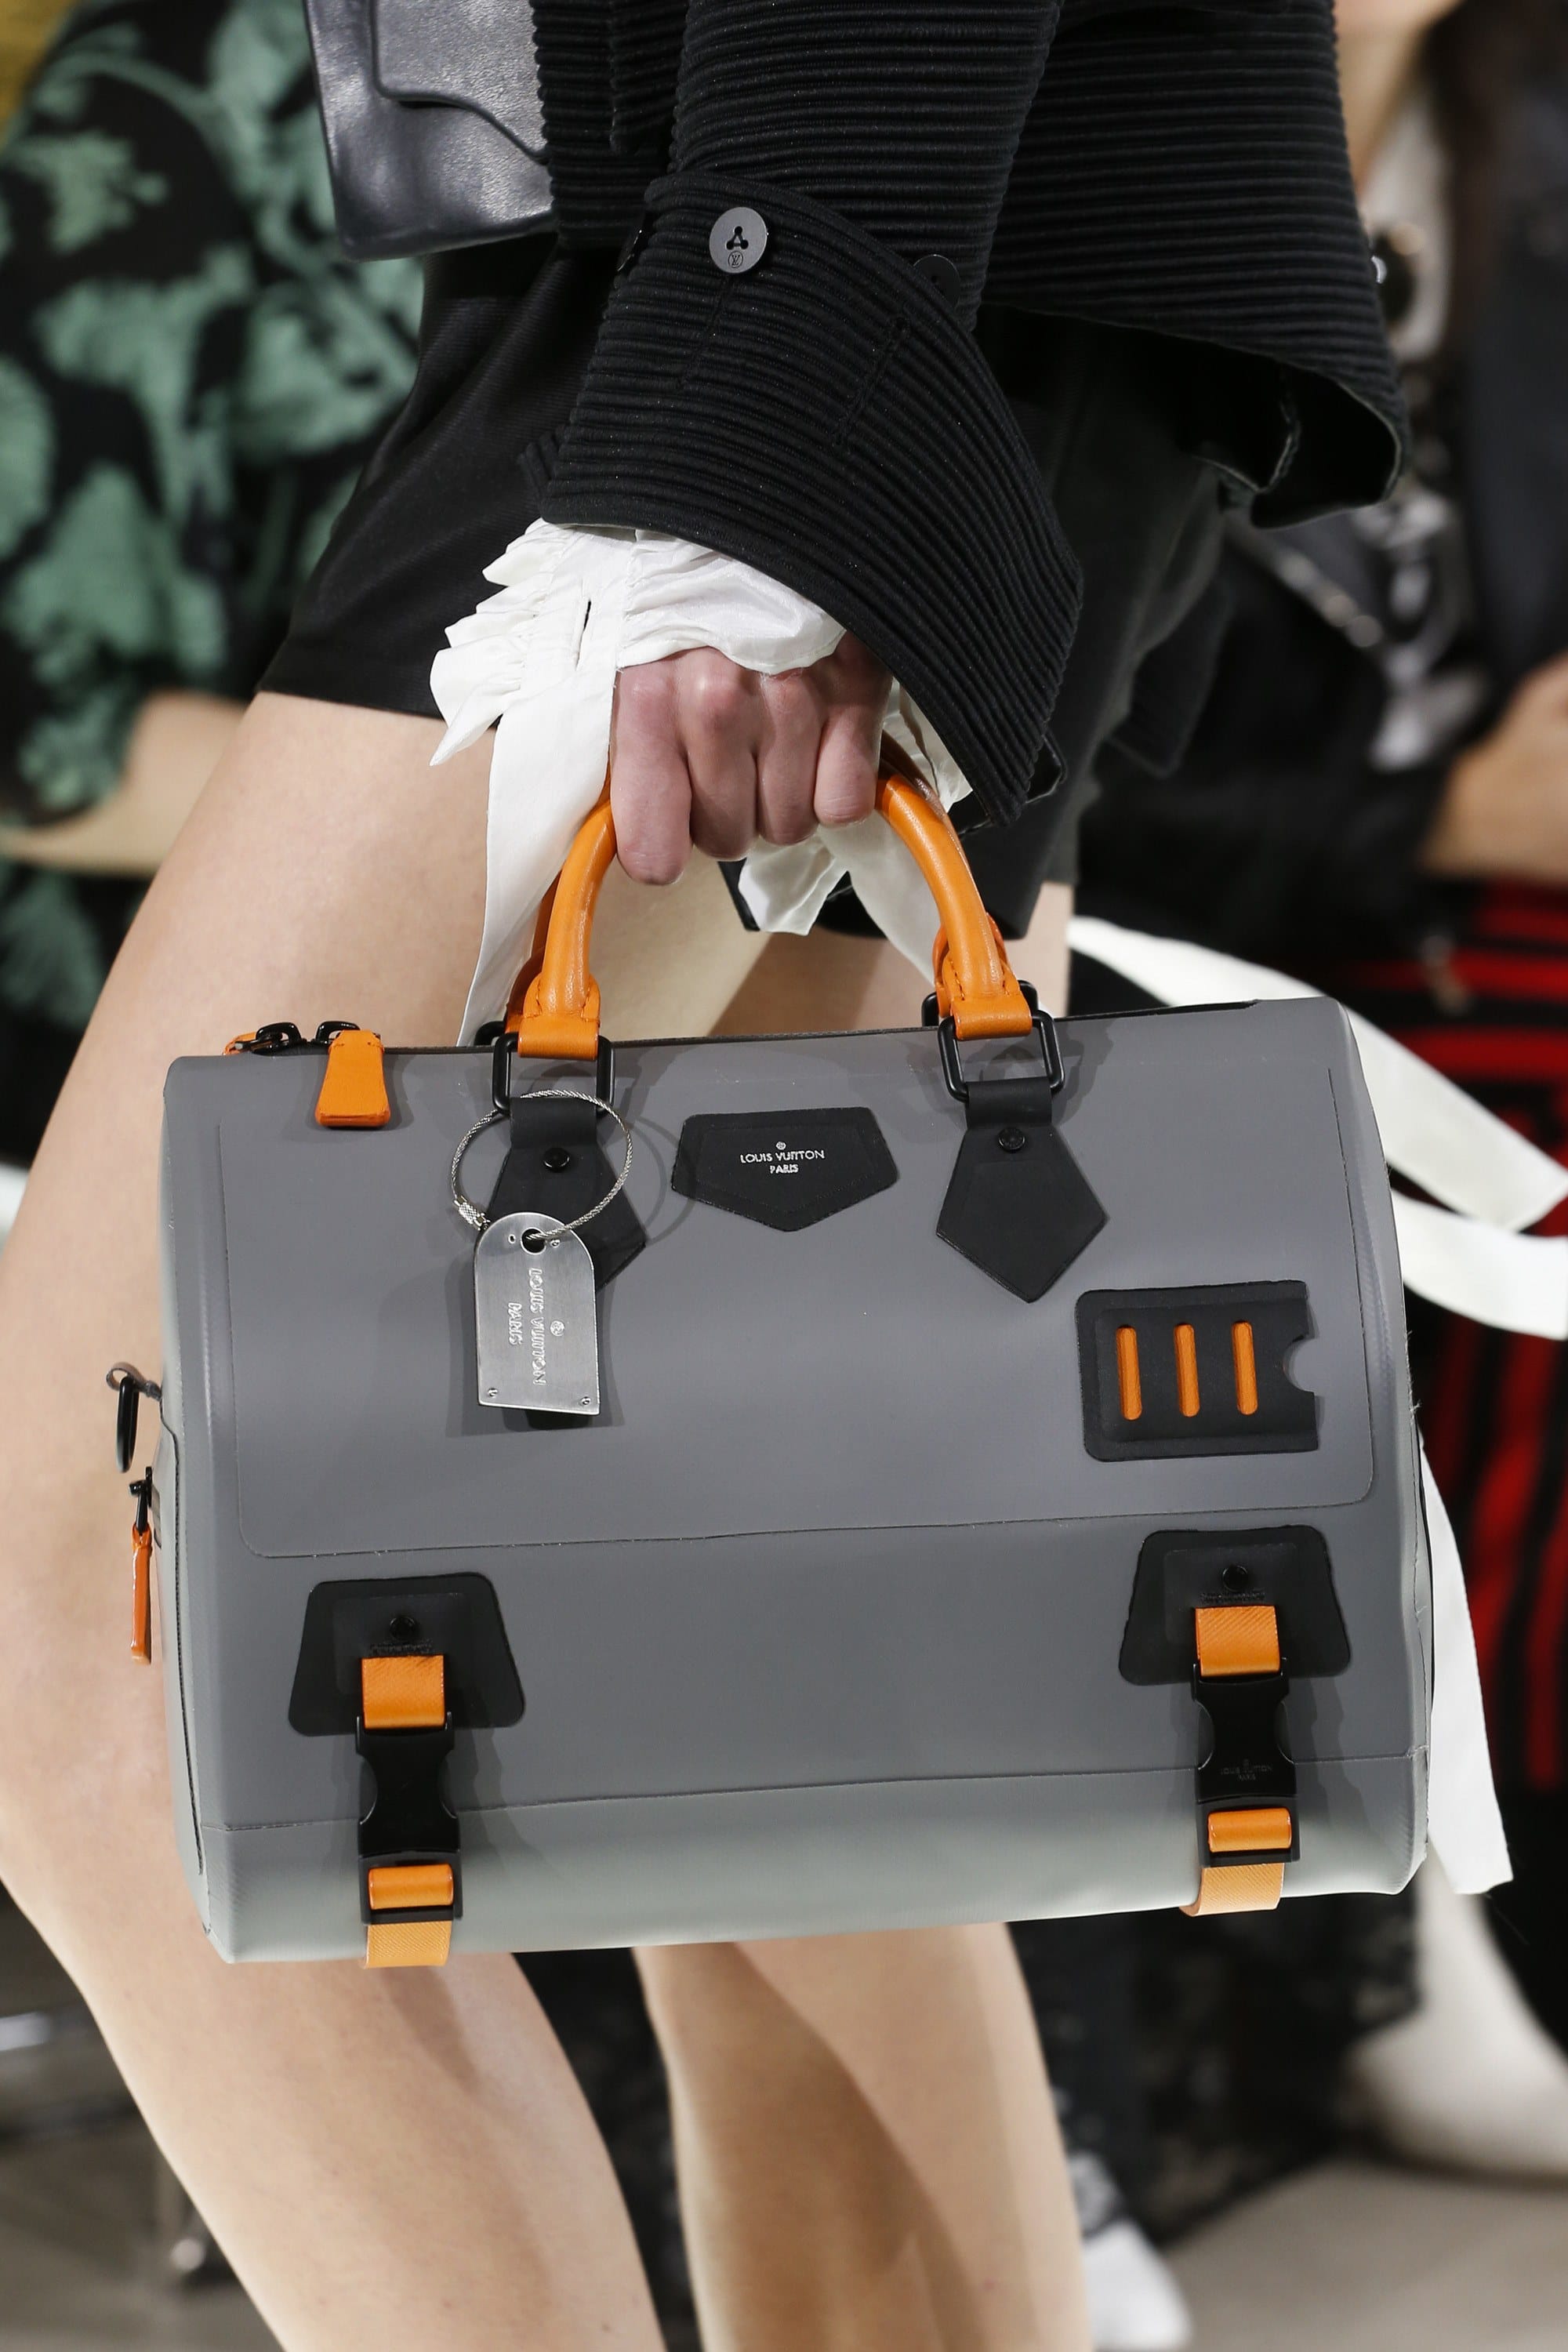 Handbag Review: Louis Vuitton Speedy 35 - The Brunette Nomad